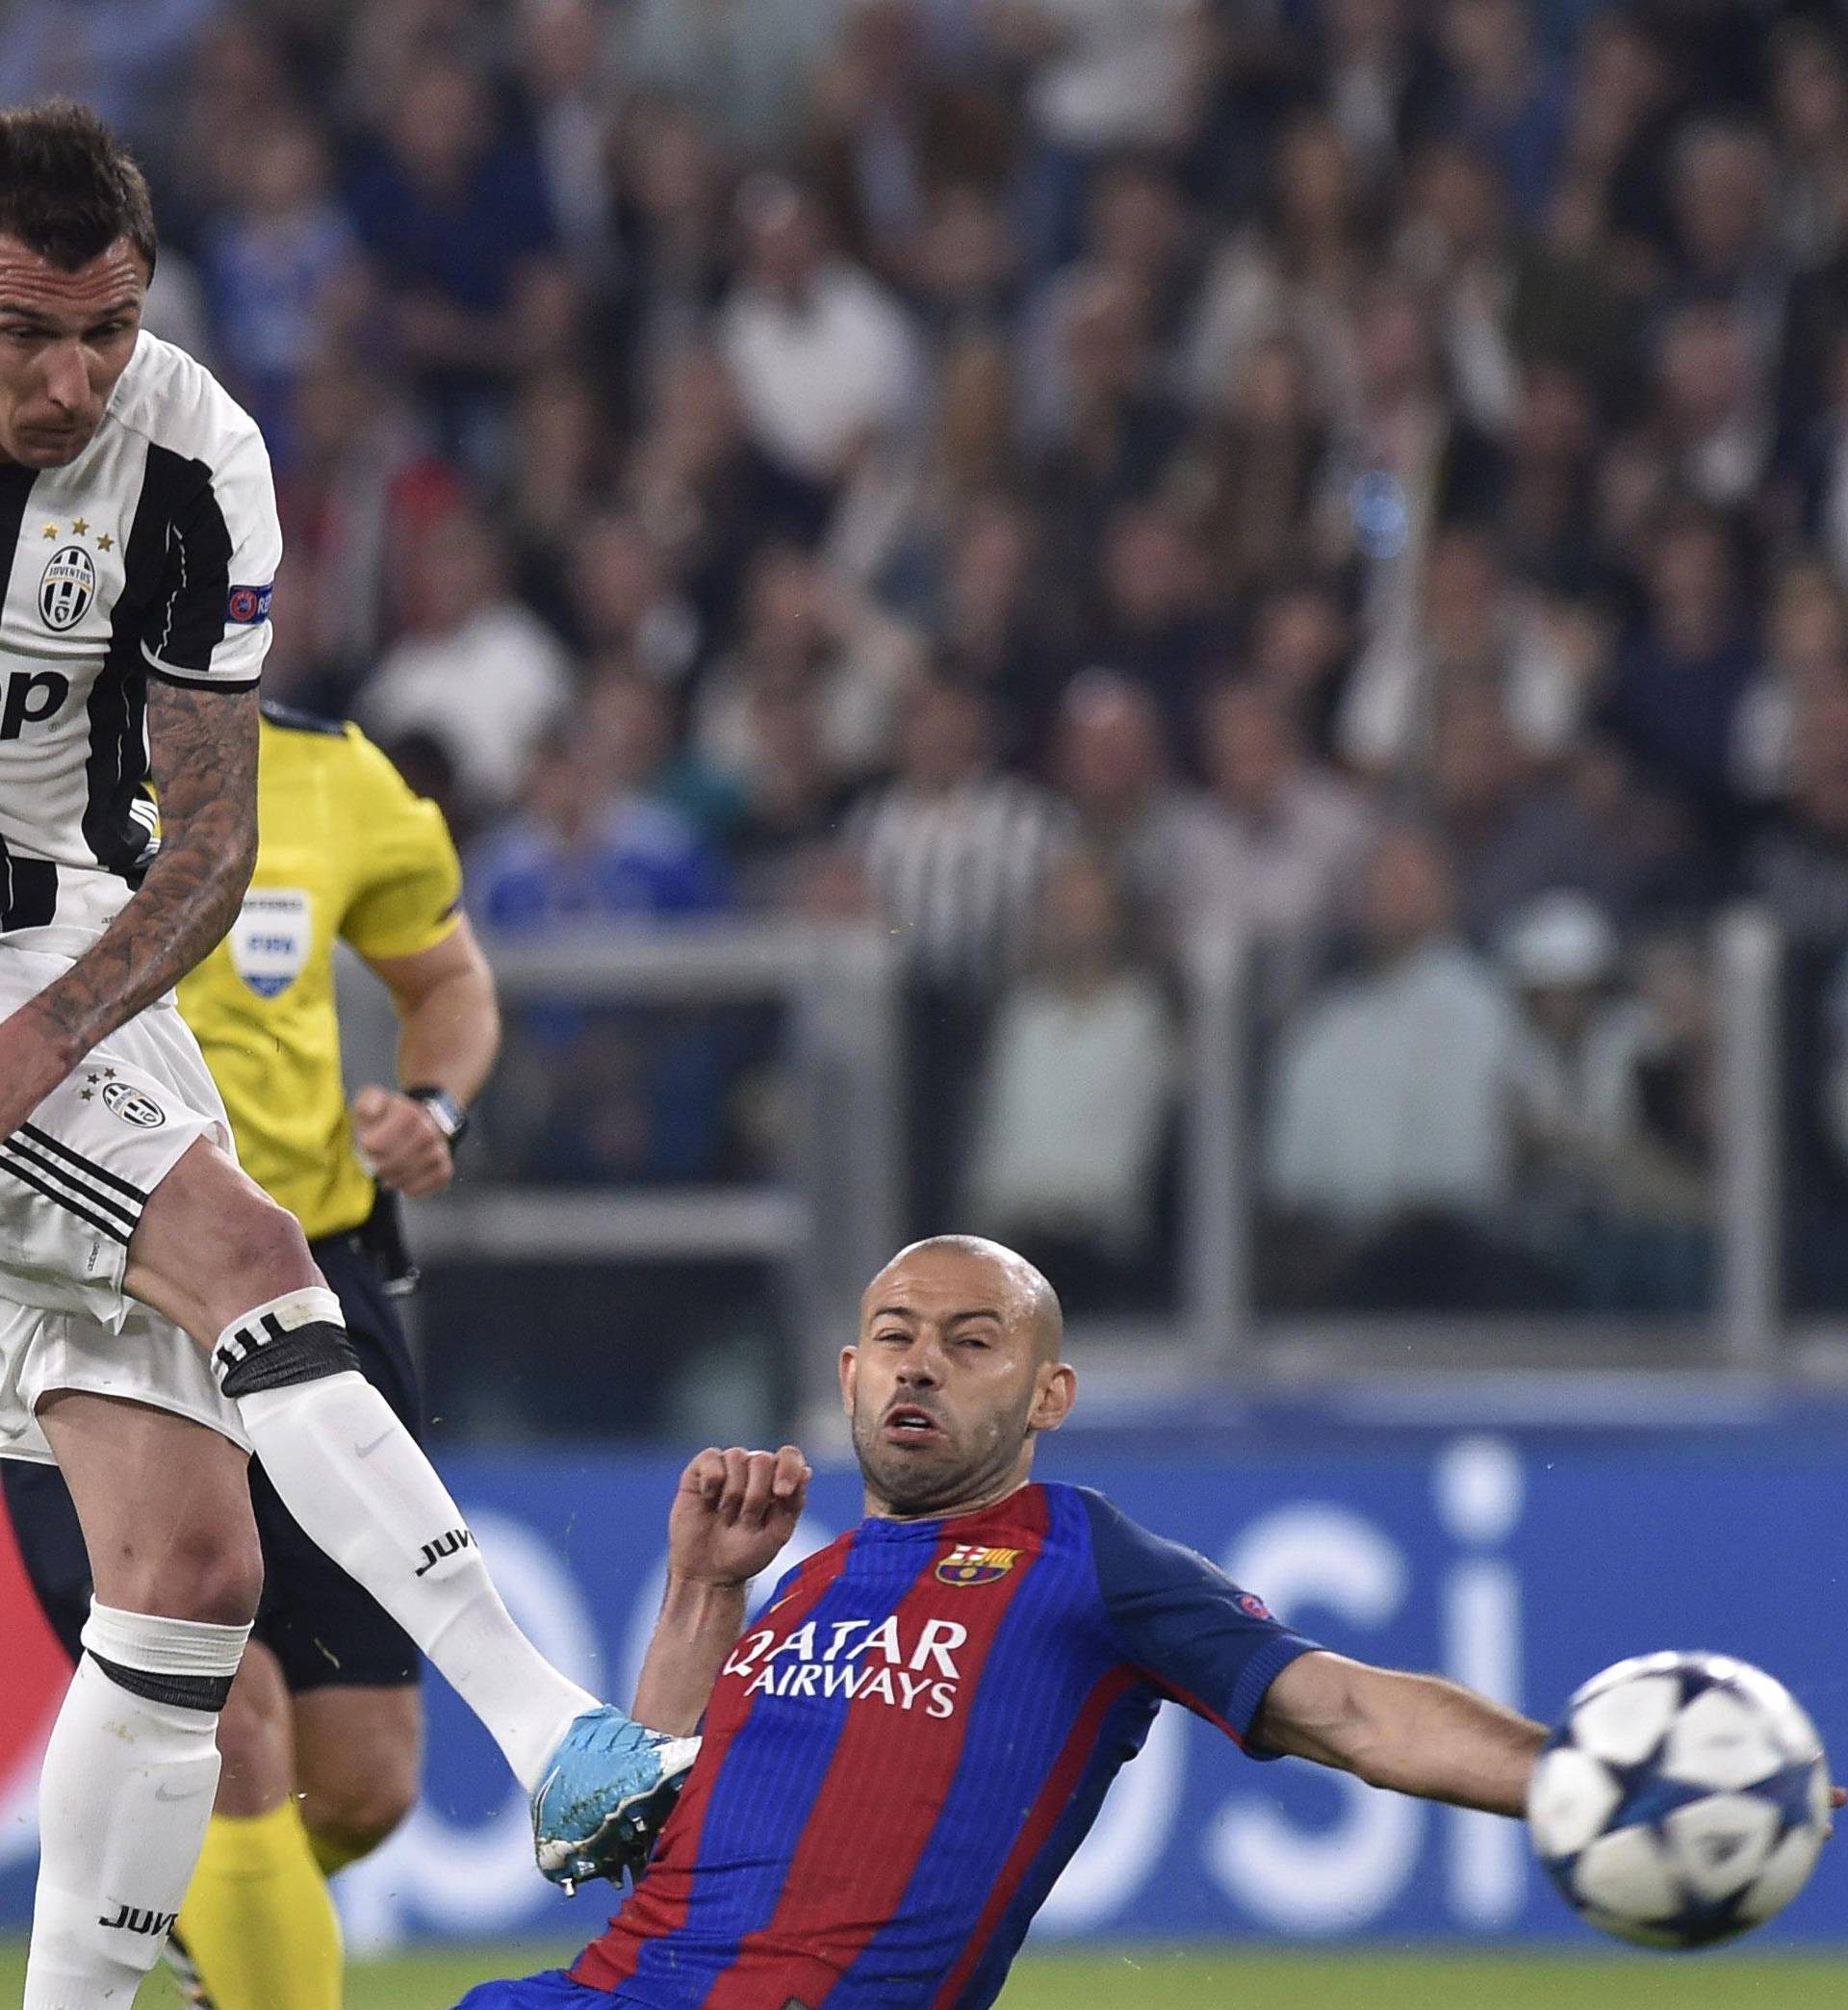 Barcelona's Javier Mascherano attempts to block a shot from Juventus' Mario Mandzukic